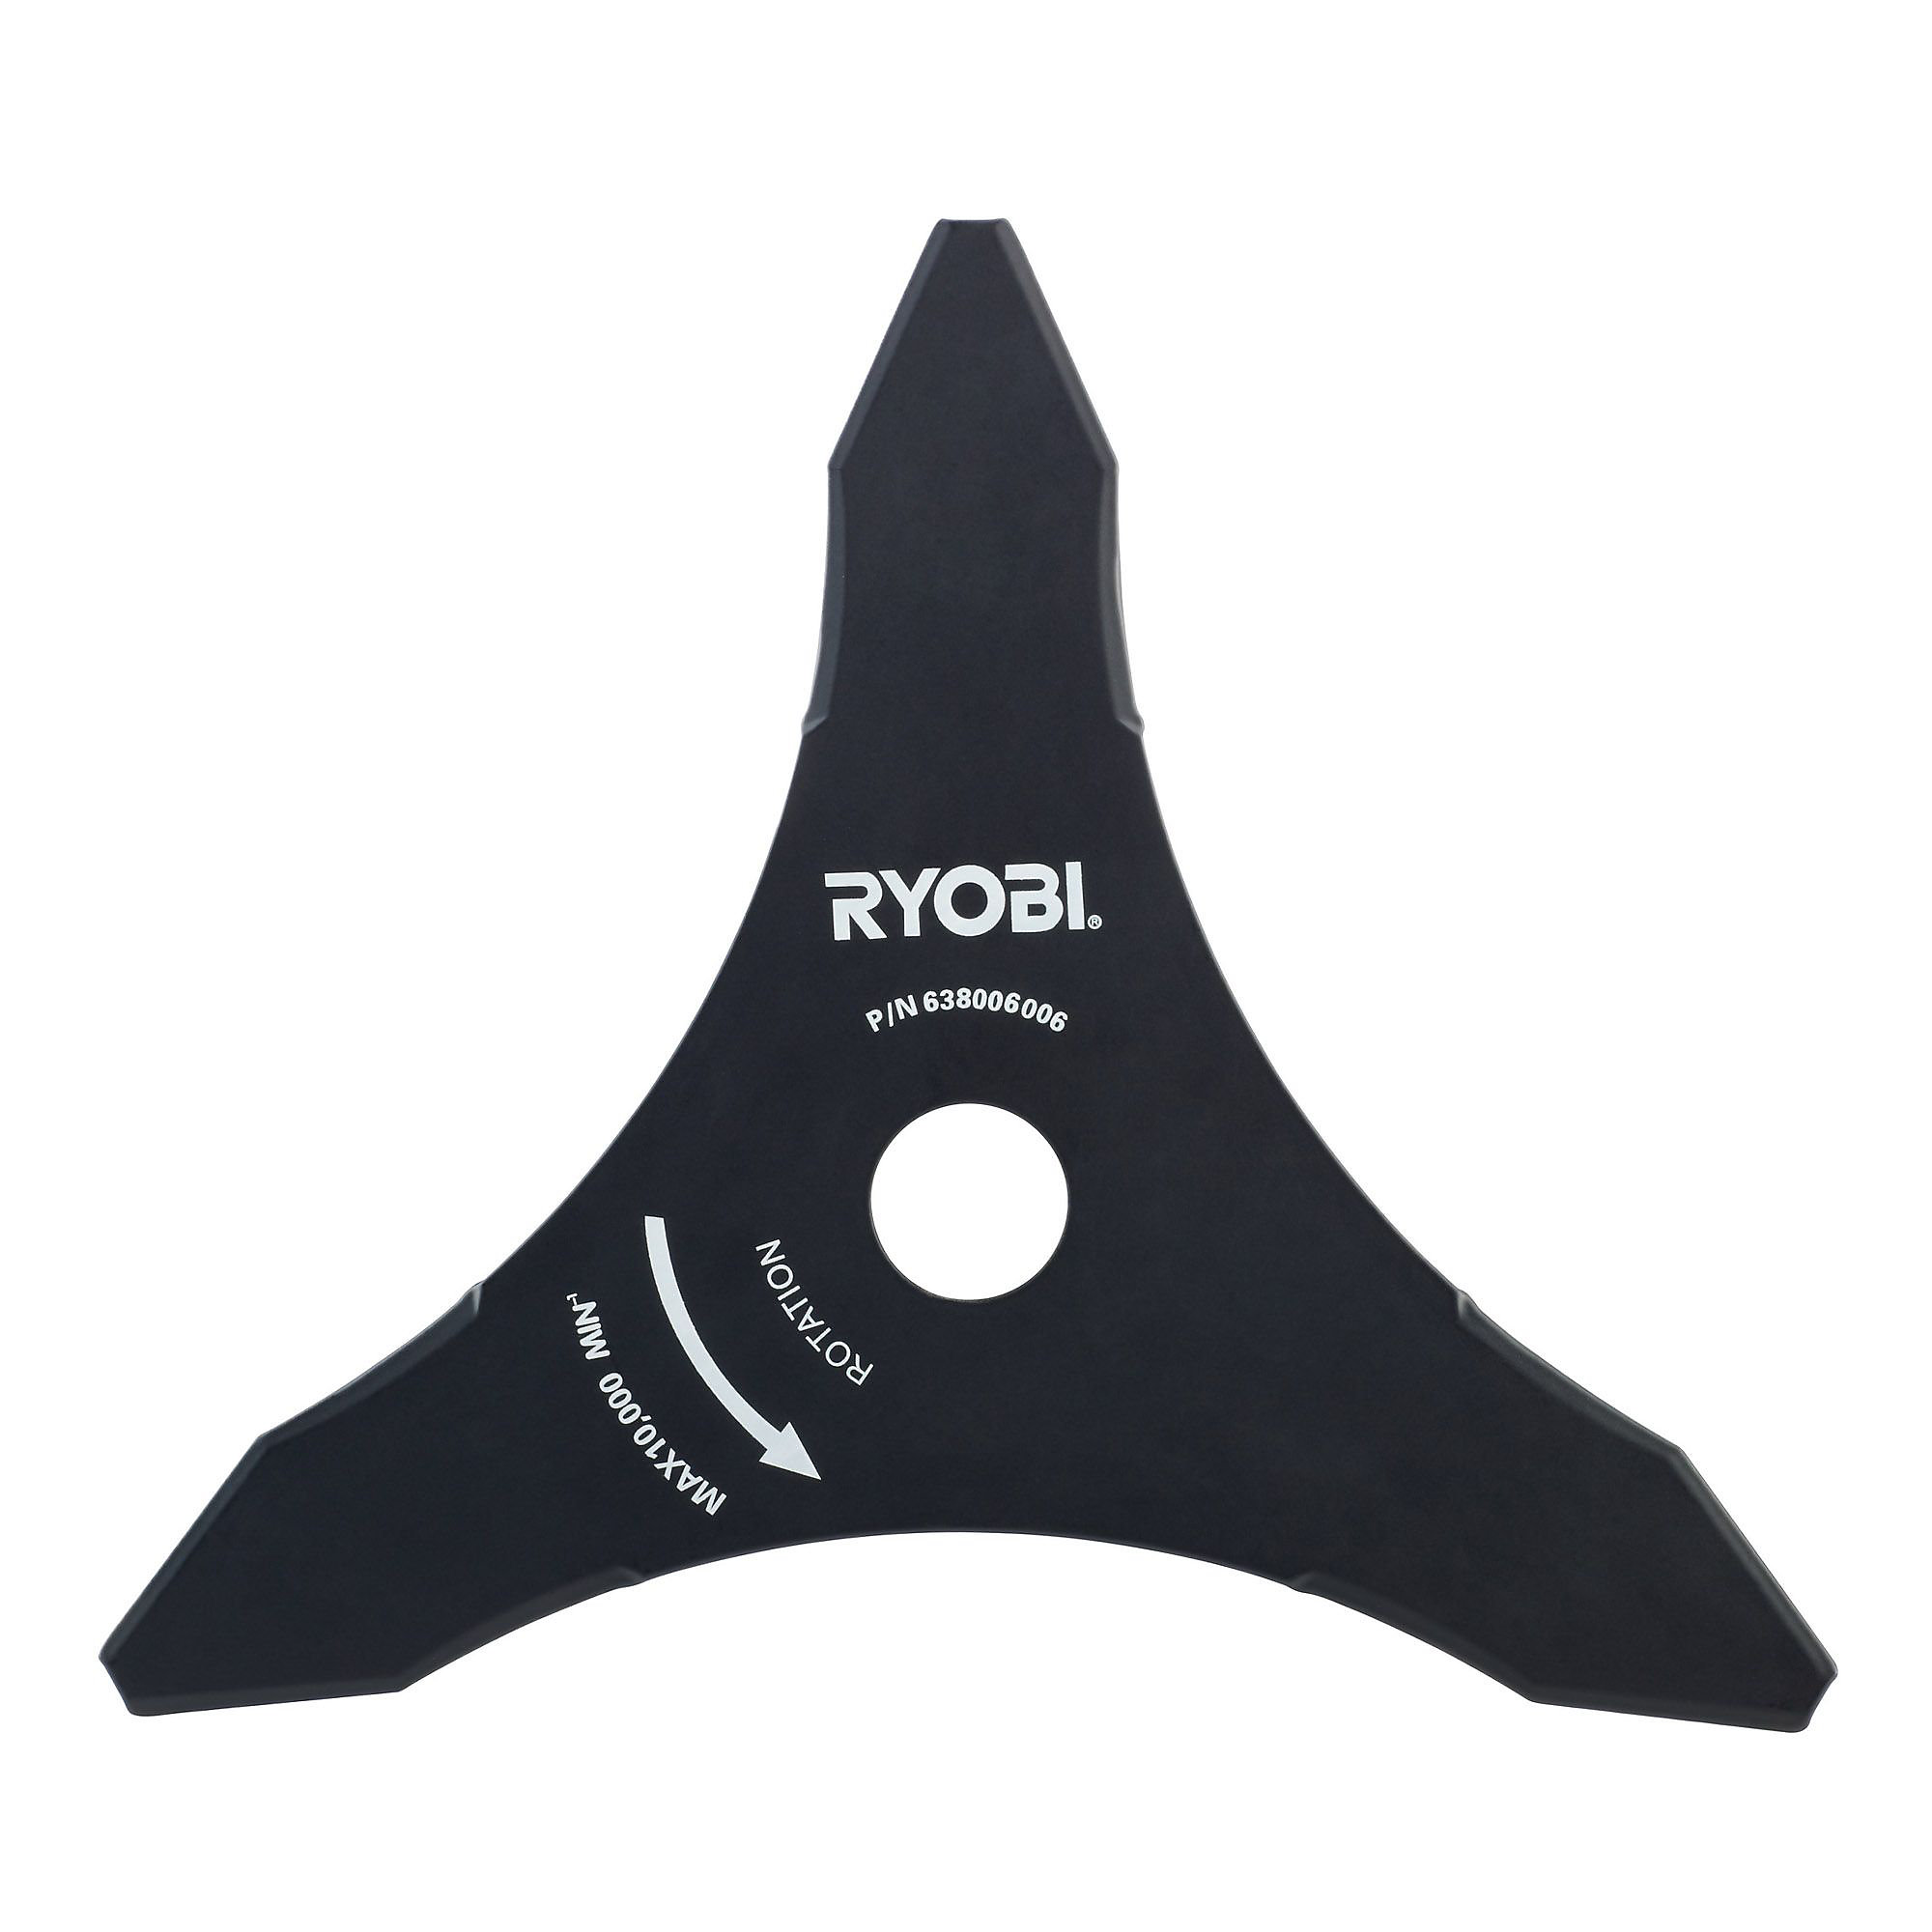 Ryobi Accessories